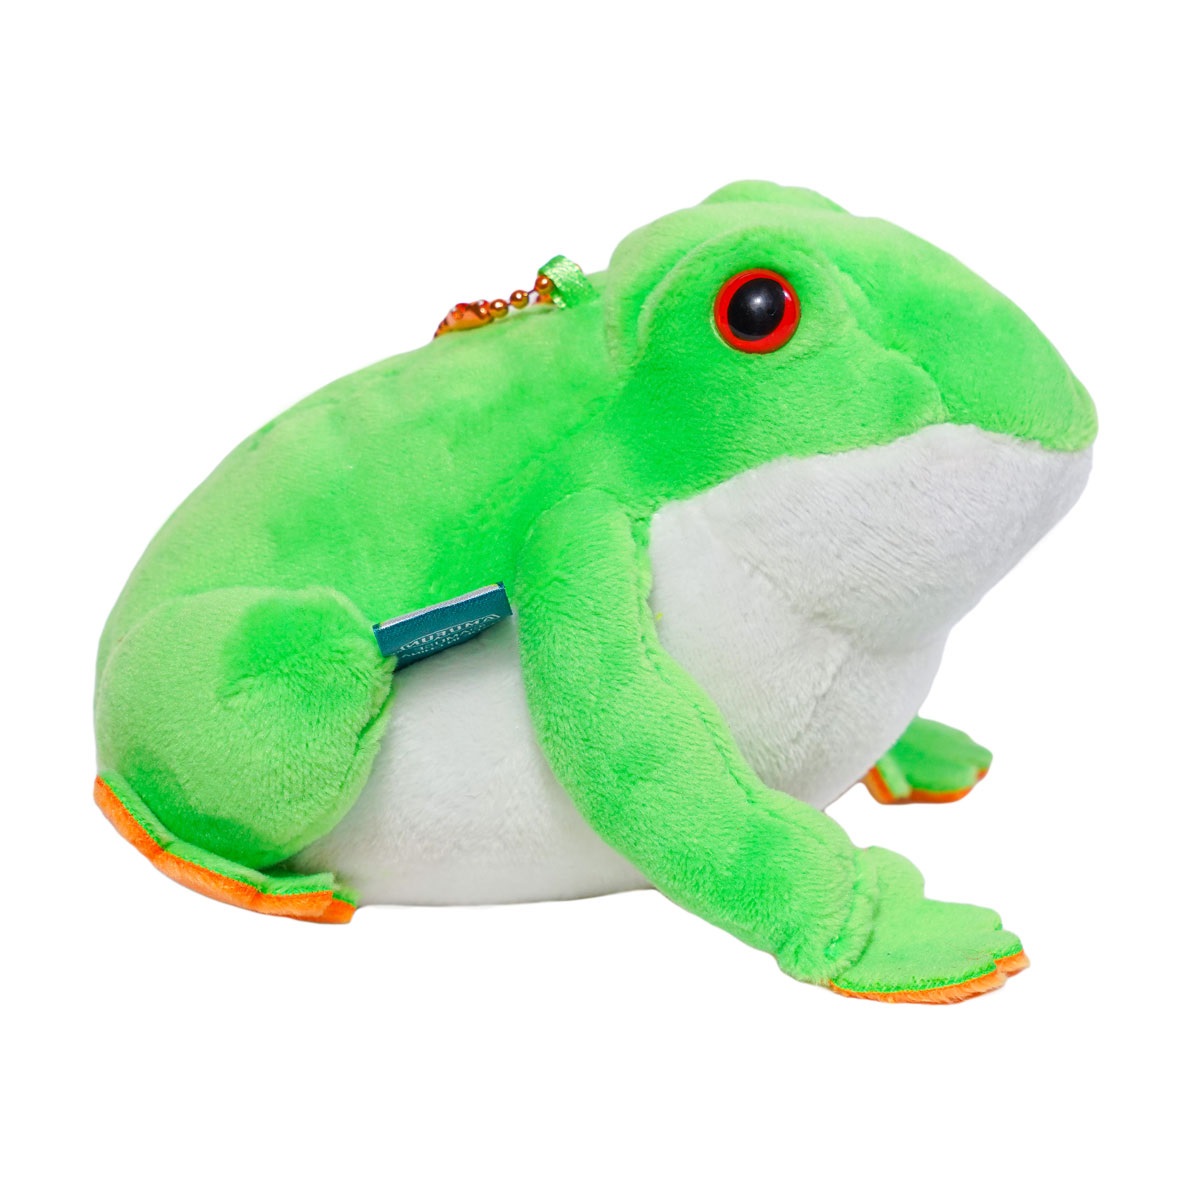 Frog Plush Toy Kawaii Stuffed Animal Green Keychain Size 3